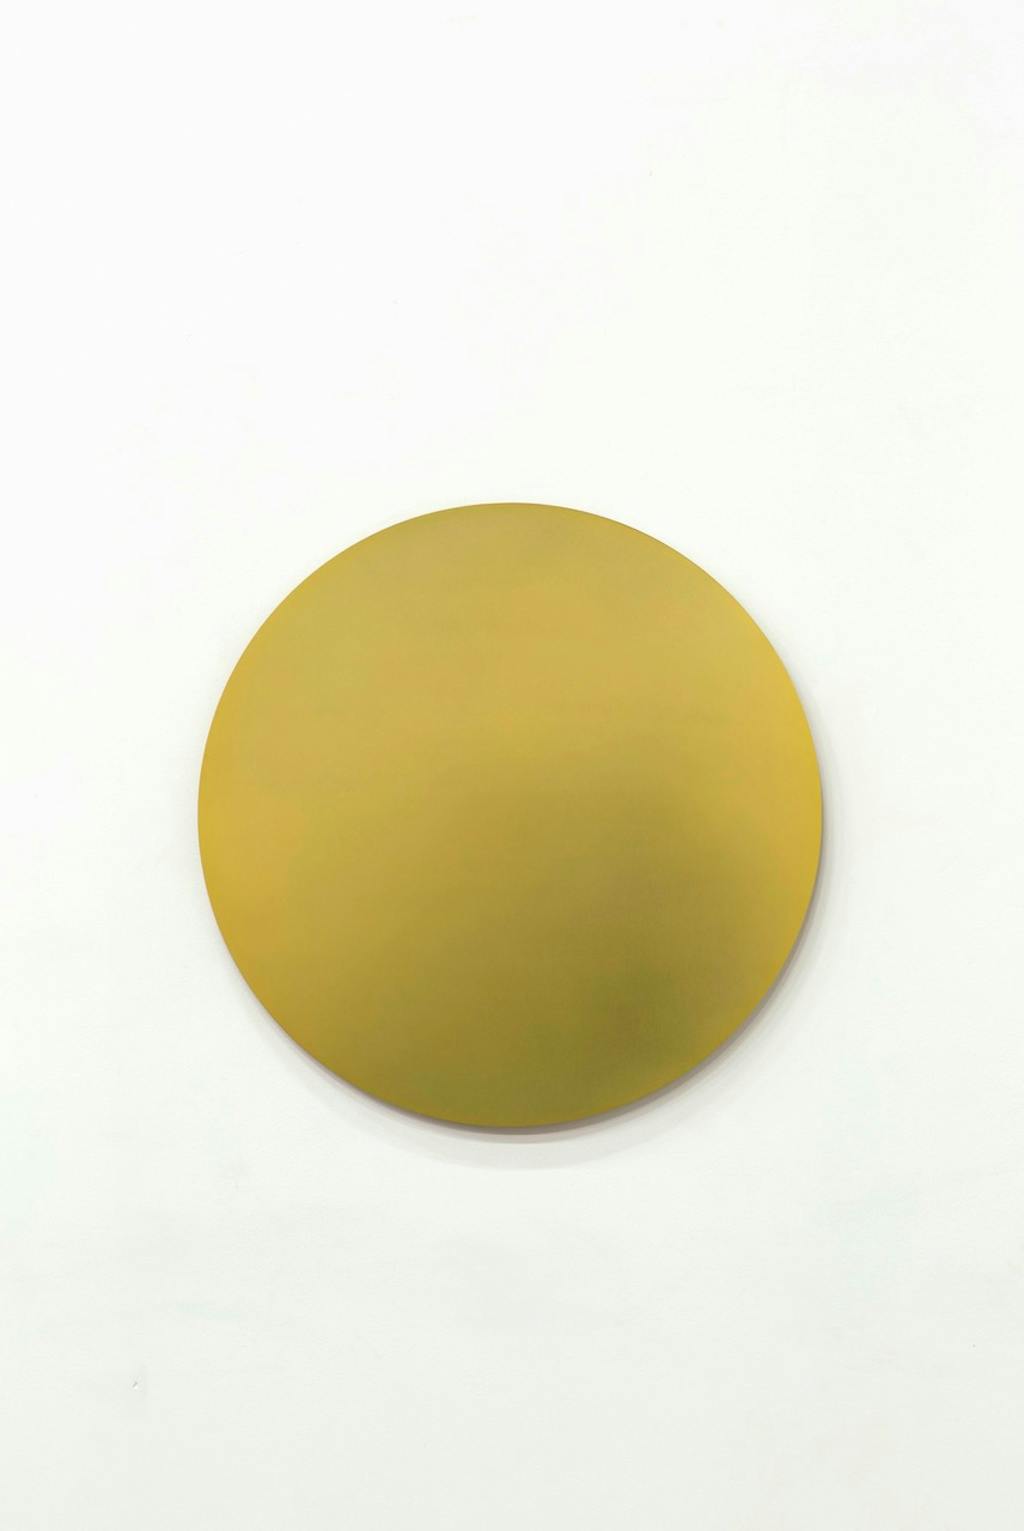 Golden circle - © kamel mennour